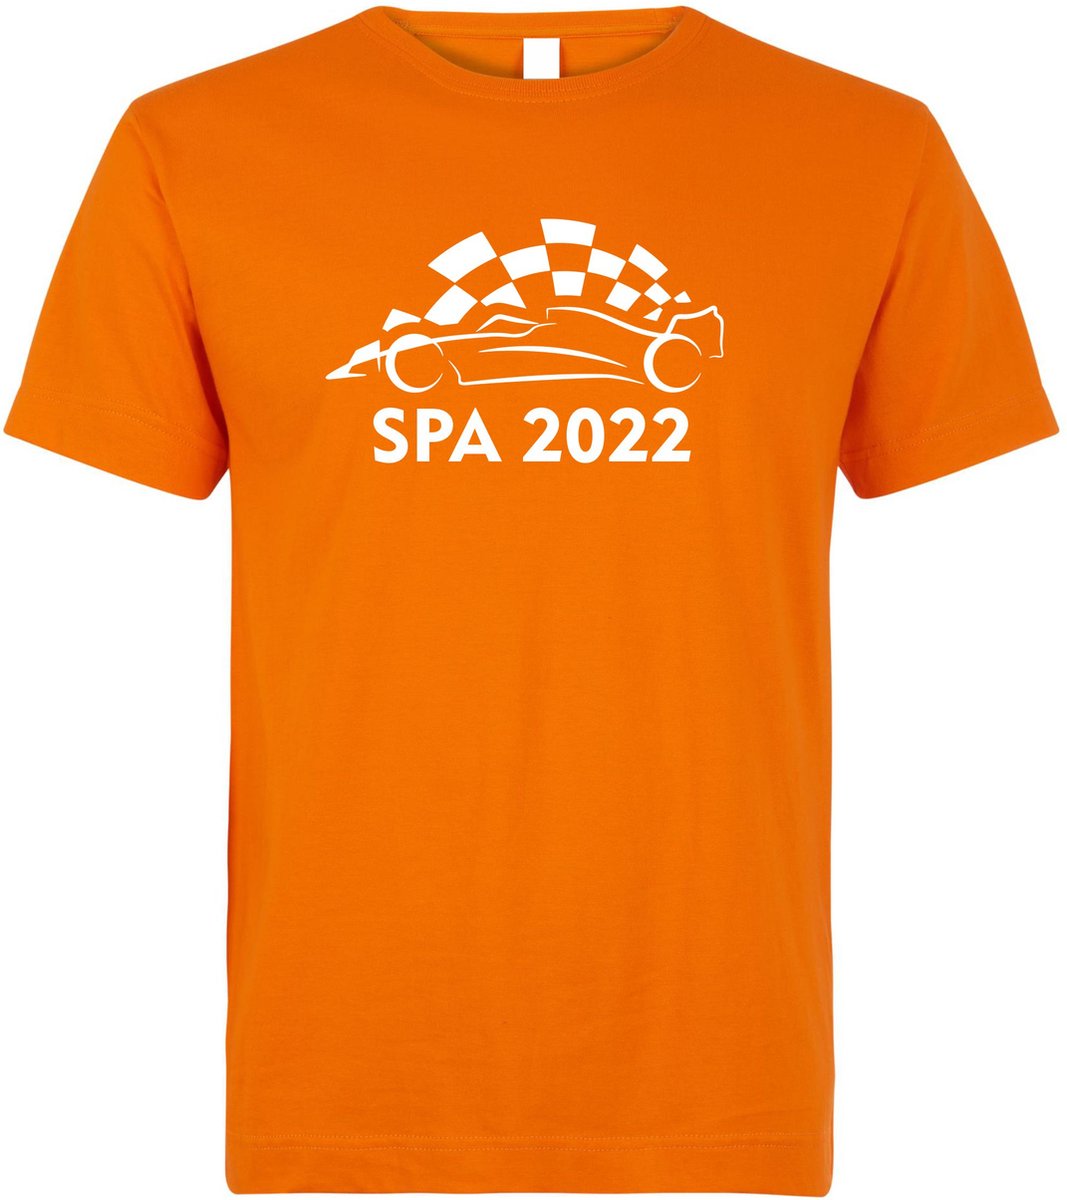 T-shirt kinderen Spa 2022 met raceauto | Max Verstappen / Red Bull Racing / Formule 1 fan | Grand Prix Circuit Spa-Francorchamps | kleding shirt | Oranje | maat 116